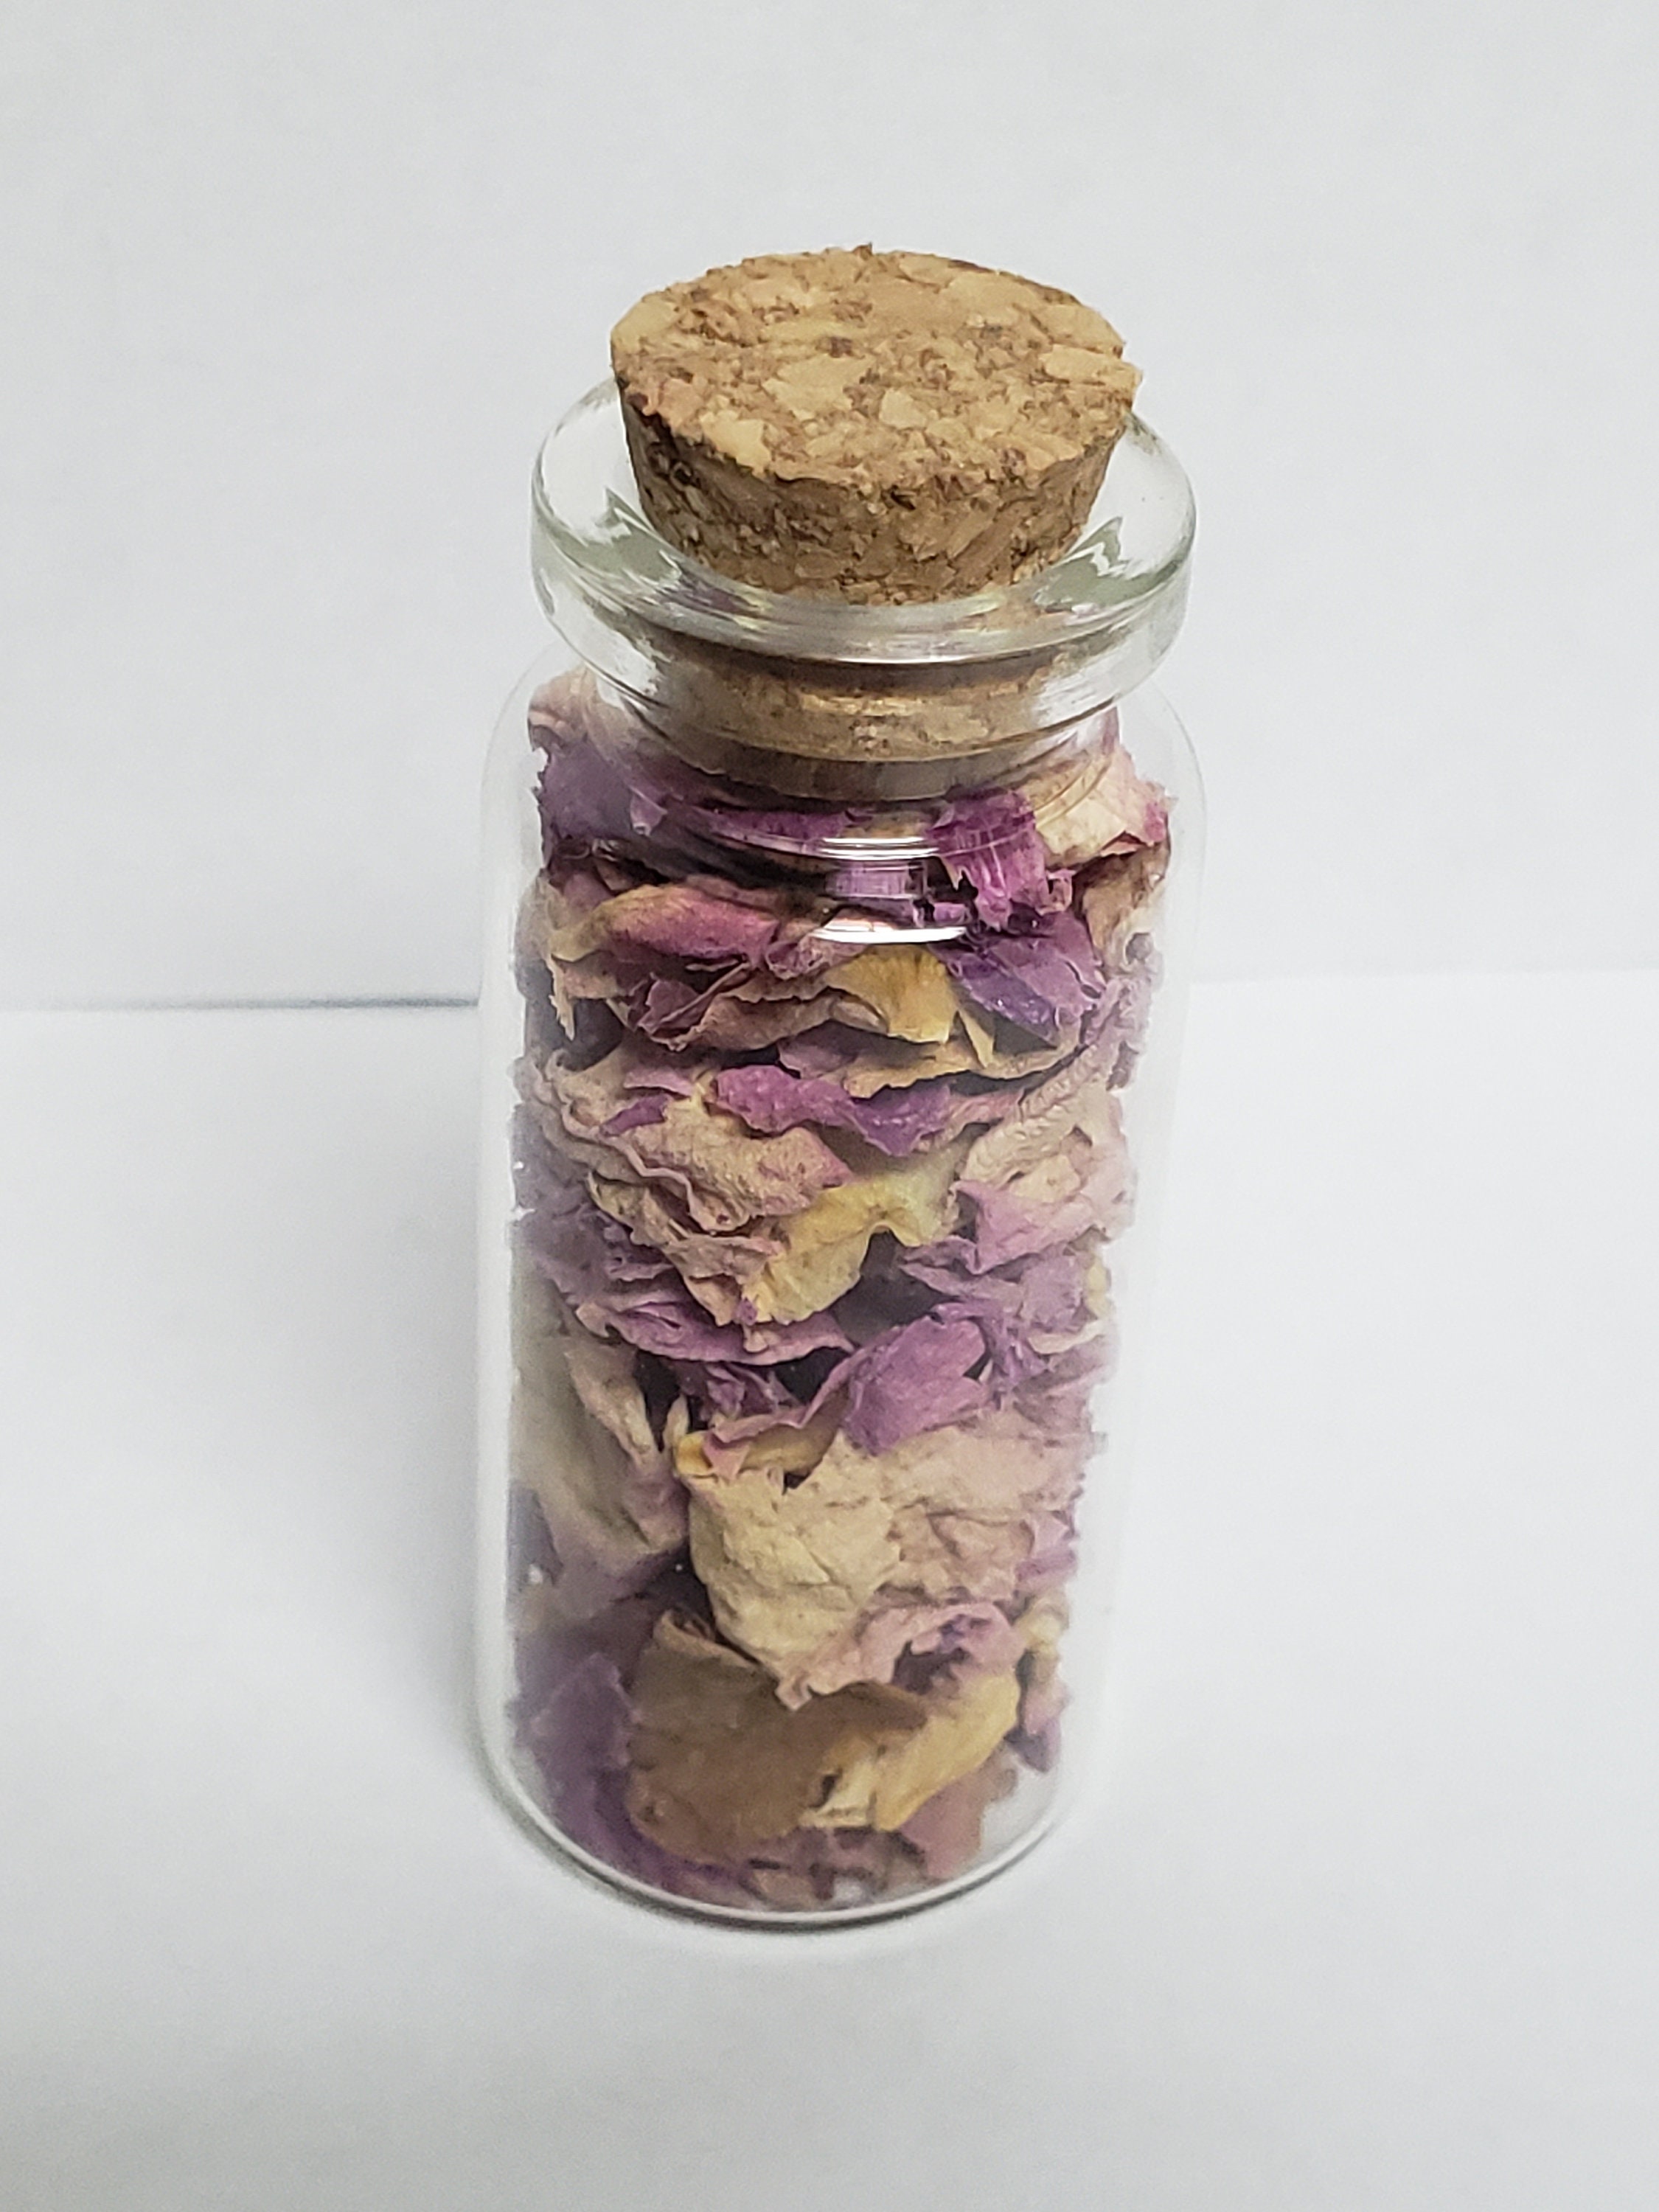 How to Make a Keepsake Rose Petal Jar - Zucchini Sisters